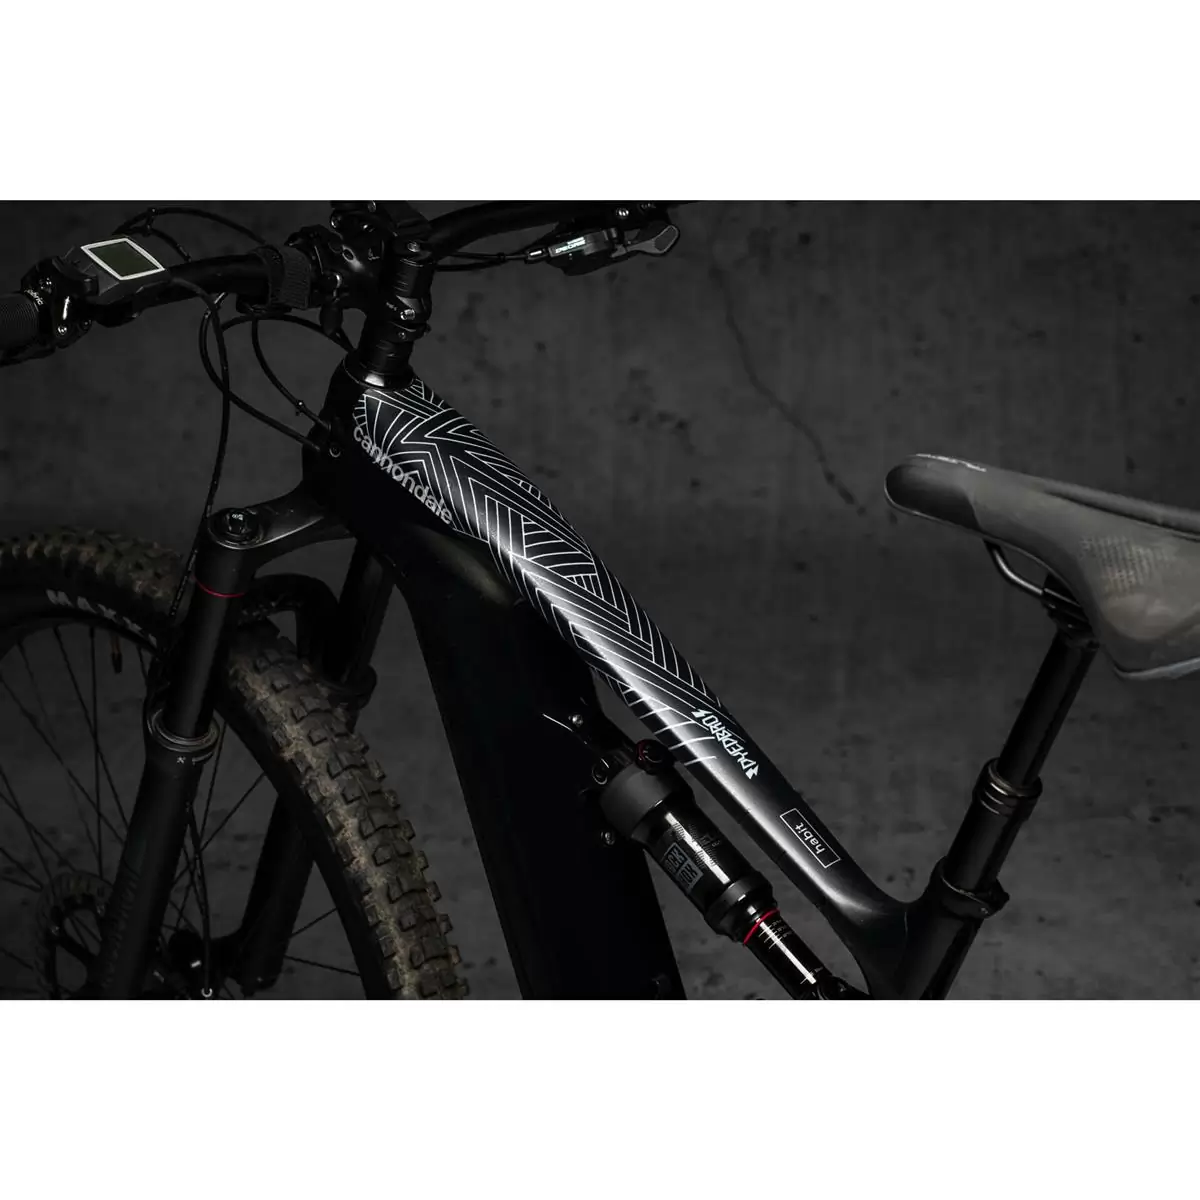 E-Bike Frame Protection Kit Stay Free White - image